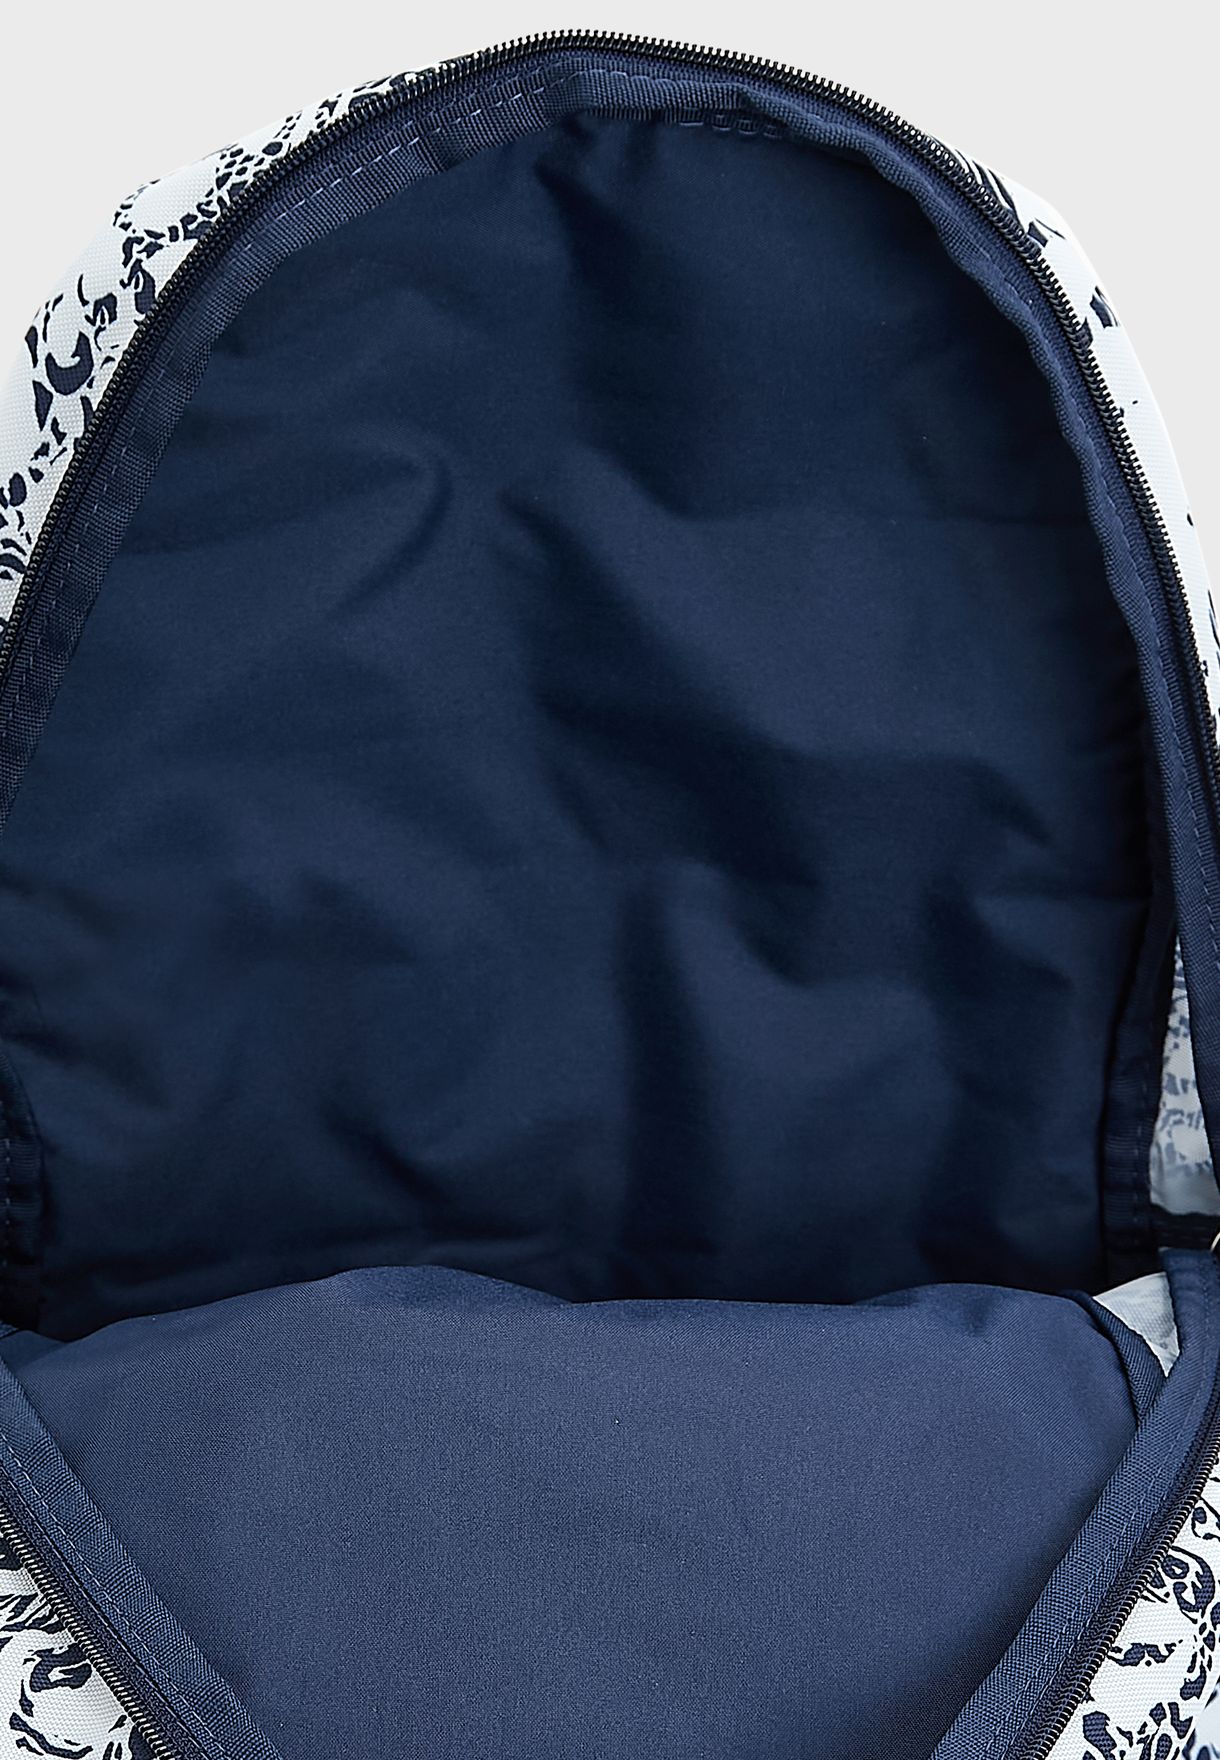 Cheebrah Elemental Backpack